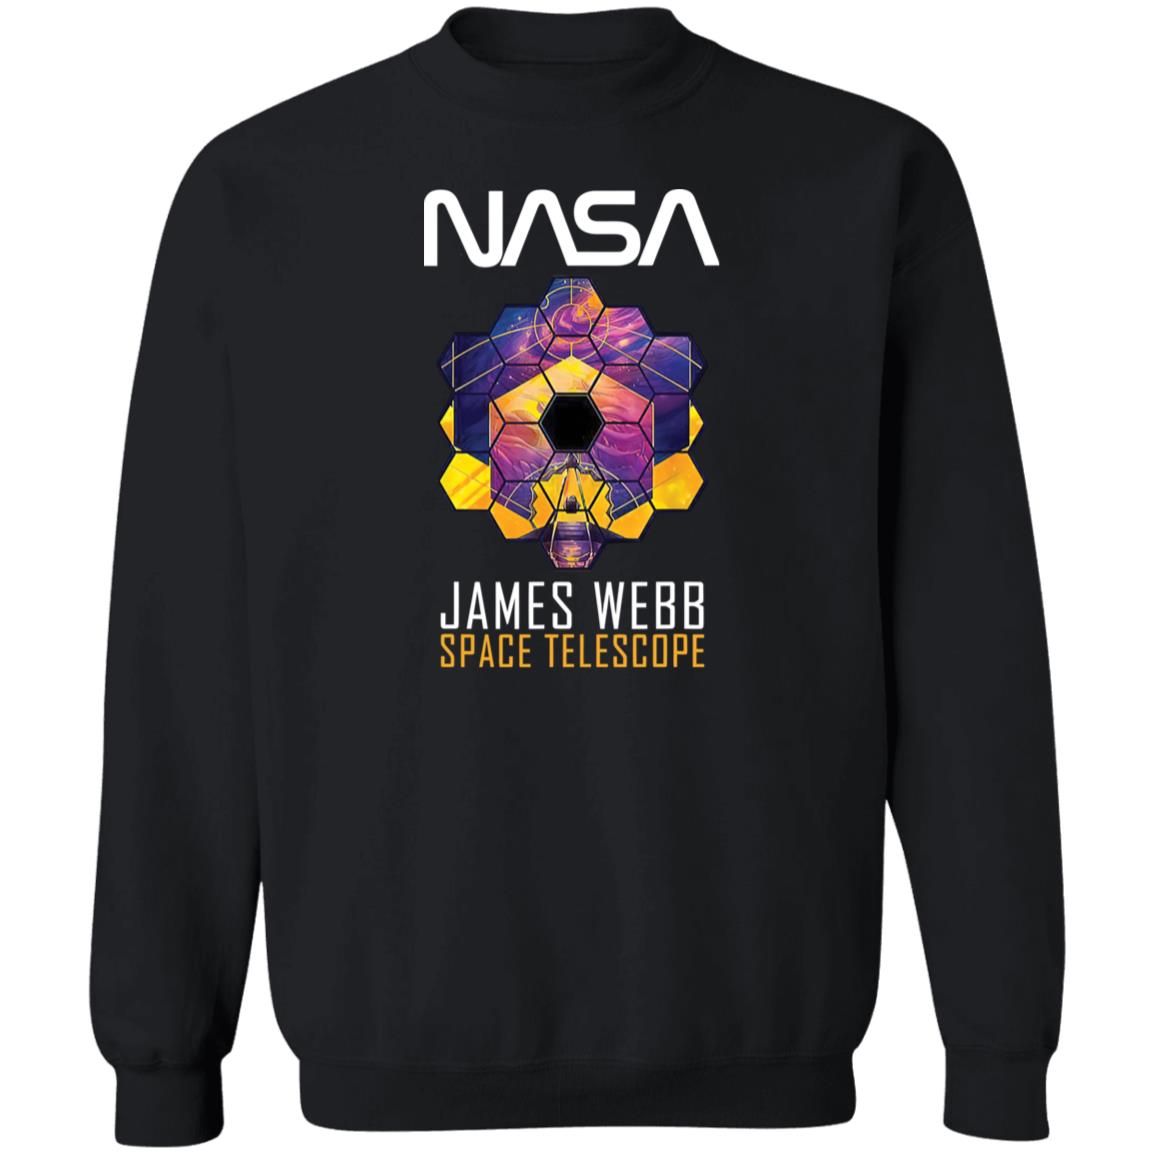 Nasa James Webb Space Telescope Shirt 2